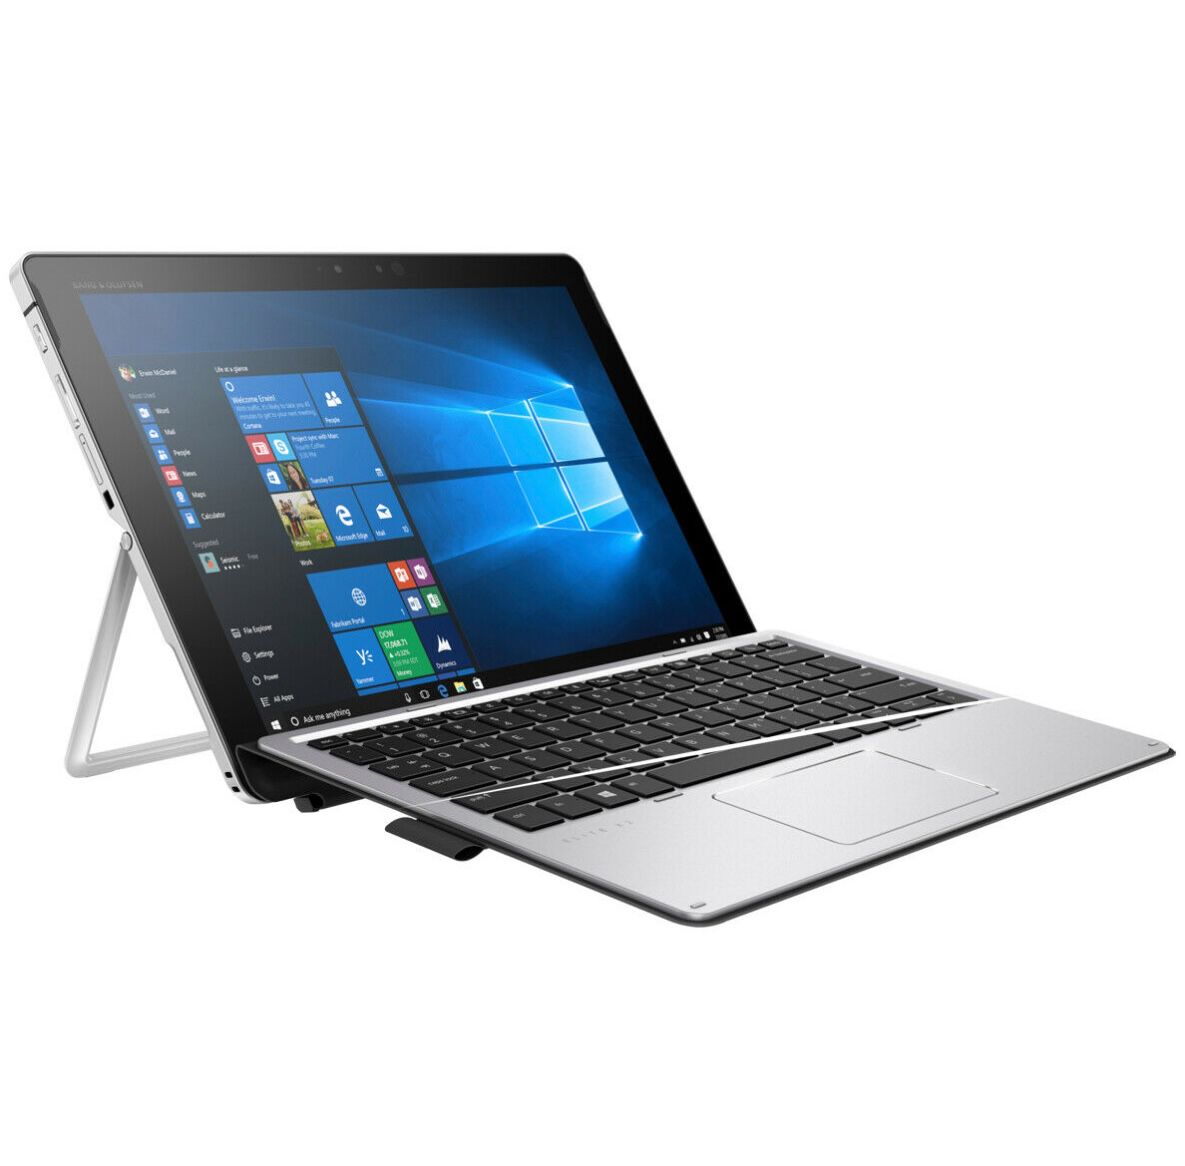 HP Elite x2 1012 G2 &#8211; 12 Zoll Hybrid-Tablet inkl. Tastatur LTE für 266€ (statt neu 527€) &#8211; refurbished